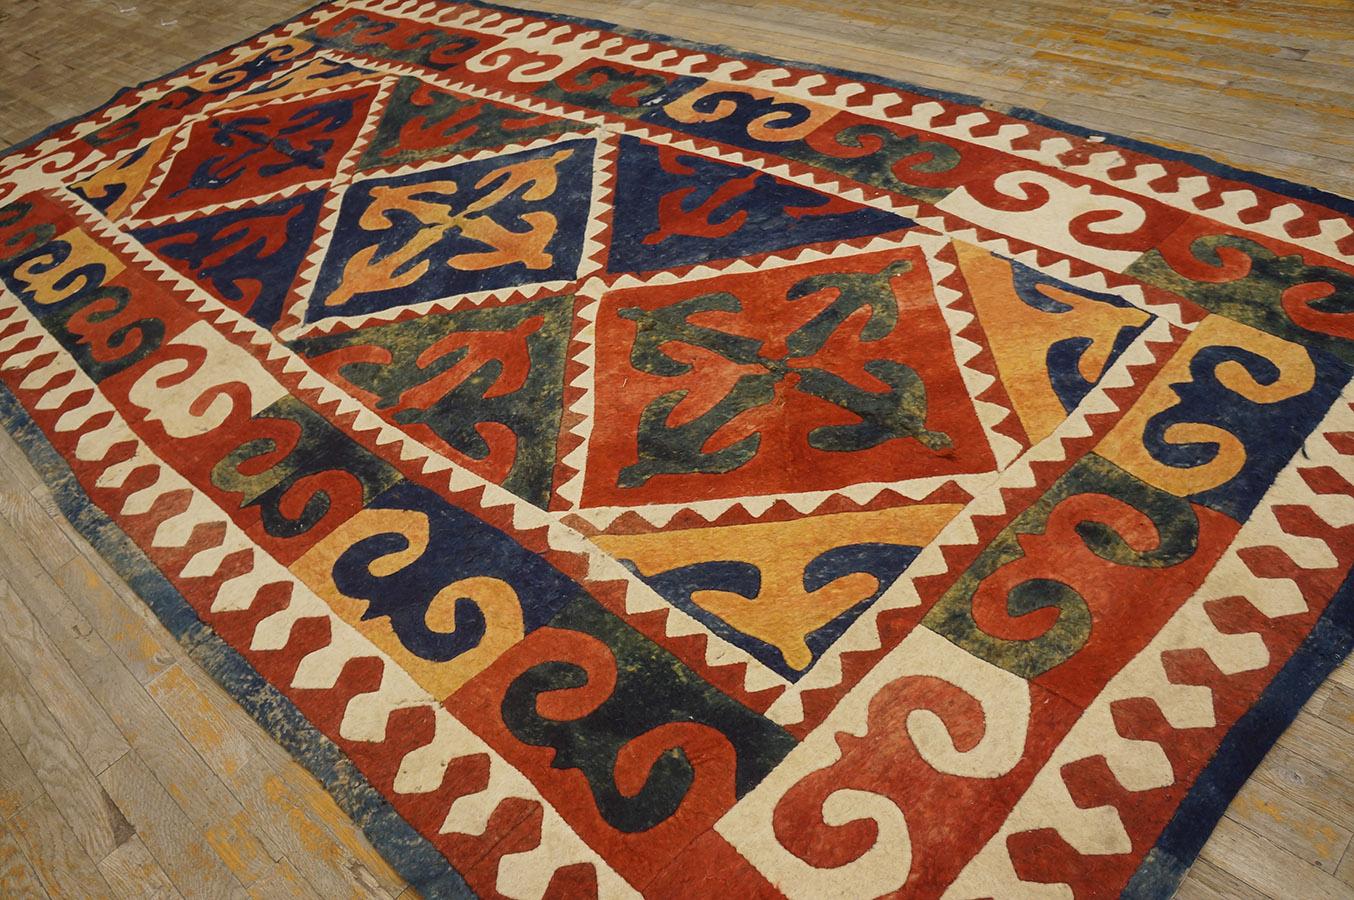 Late 19th Century Kirghiz Felt Shyrdak Carpet ( 6' x 12' - 188 x 365 ) In Good Condition For Sale In New York, NY